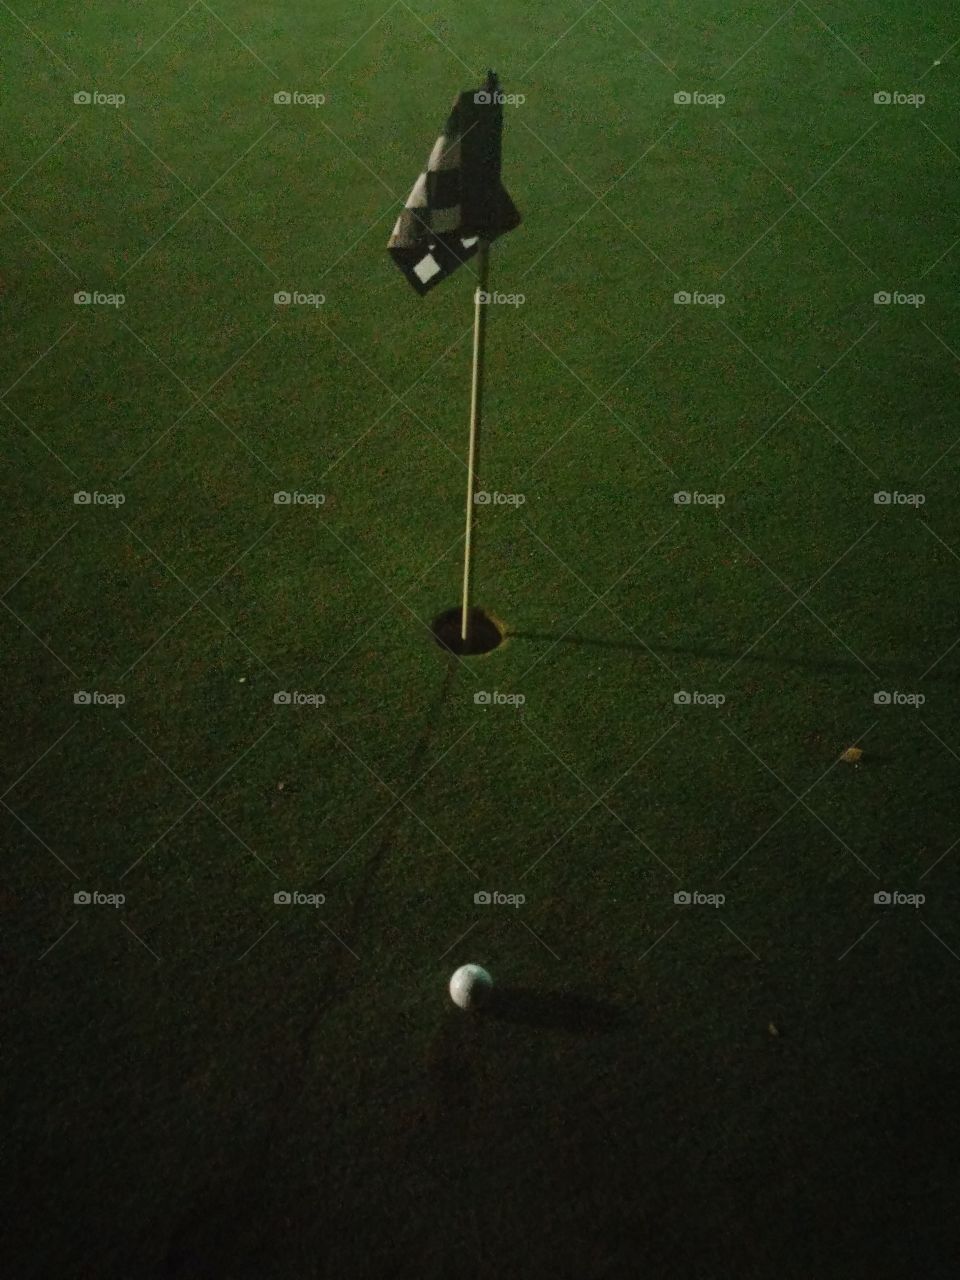 Golf at night.